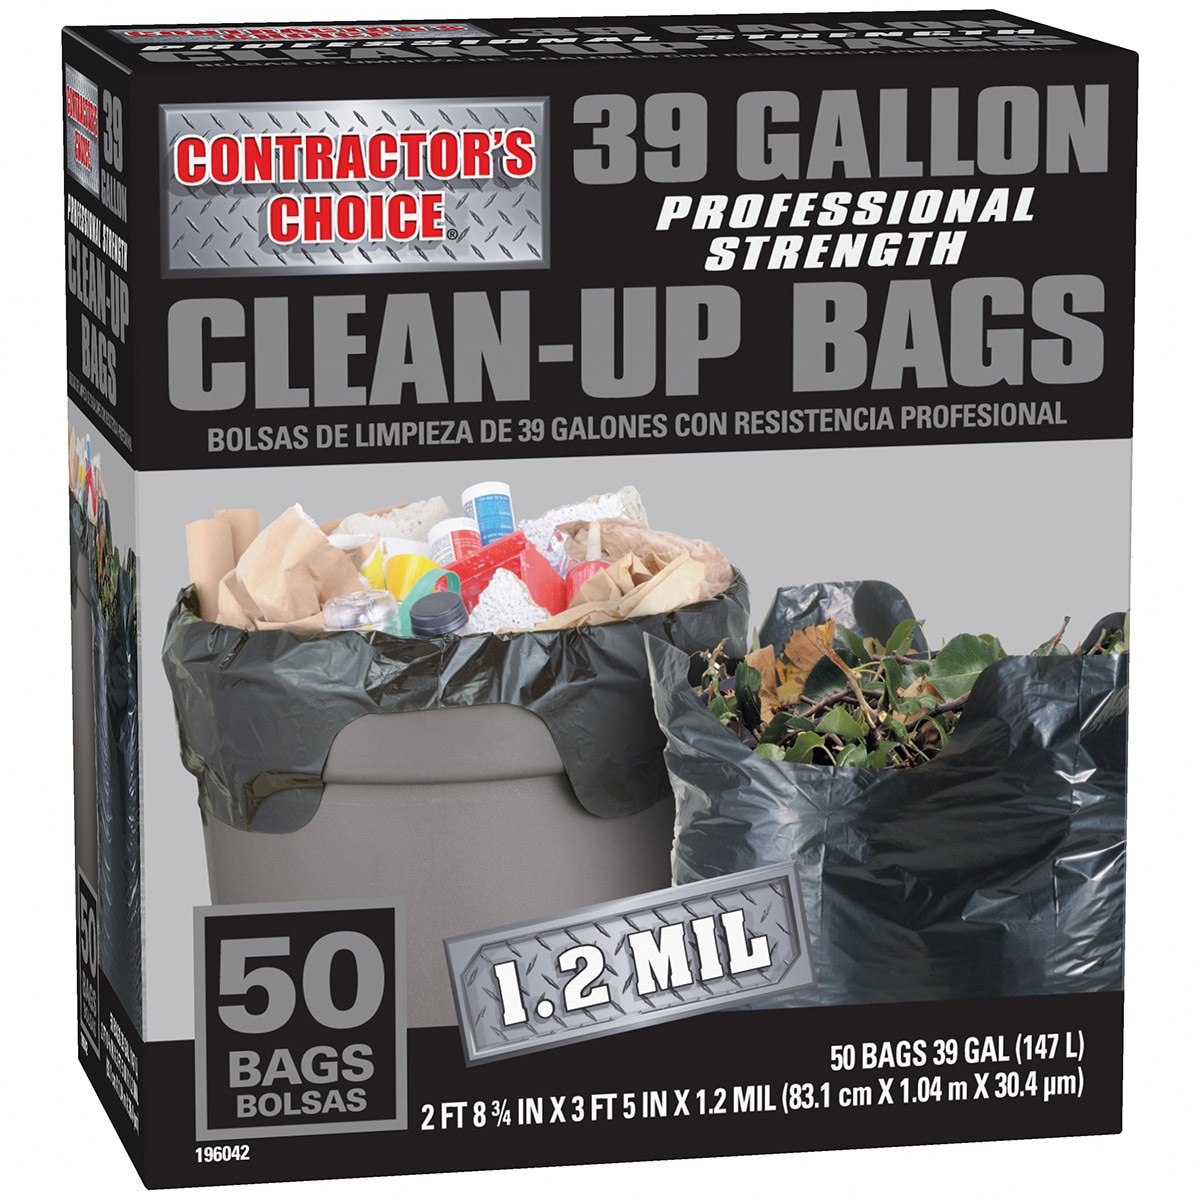 33 gal. Trash Bags, 50 Pack